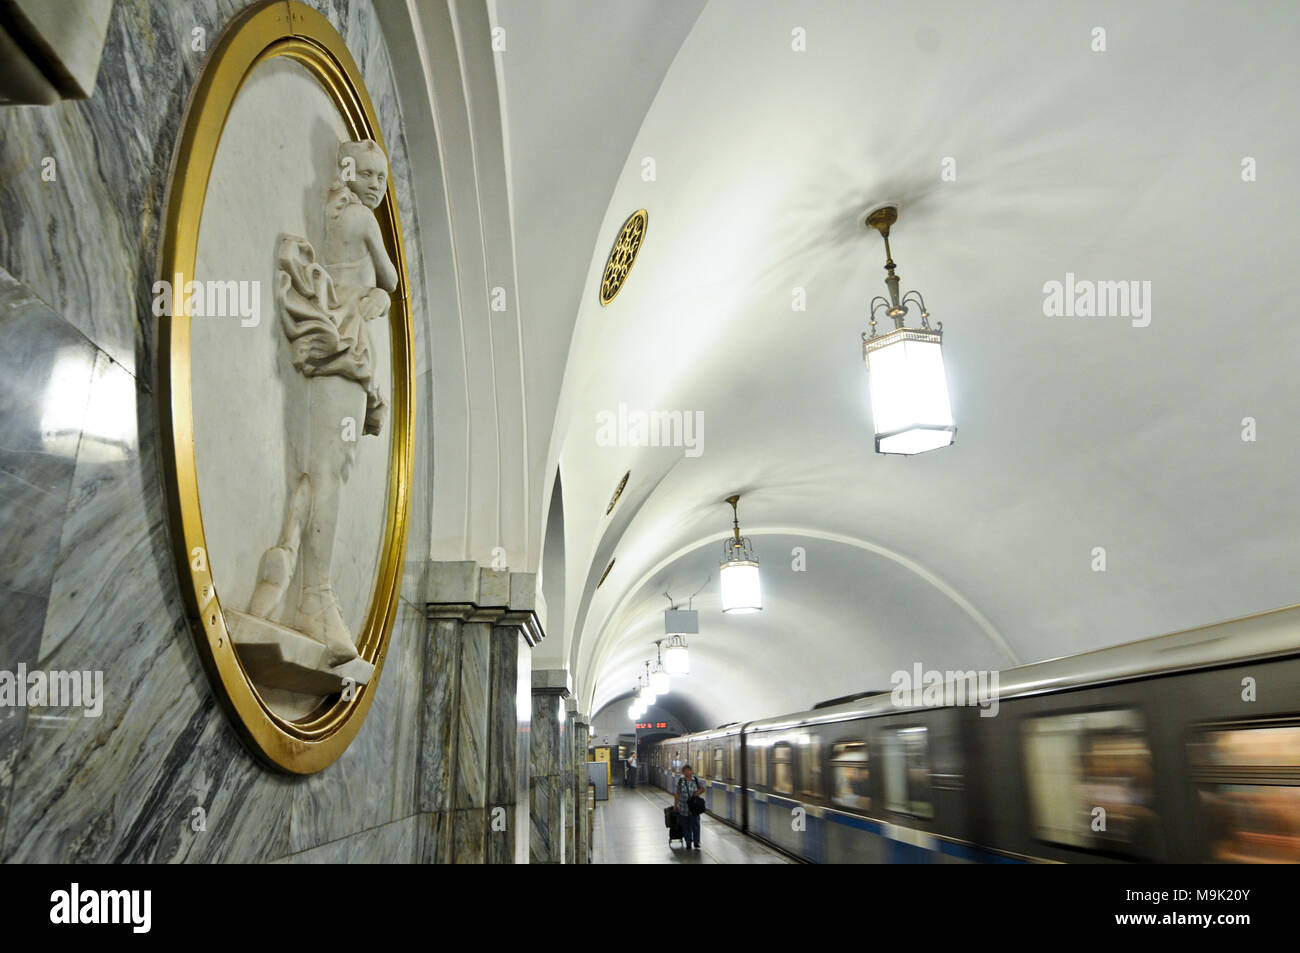 Park Kultury stazione metropolitana di Mosca, Russia Foto Stock